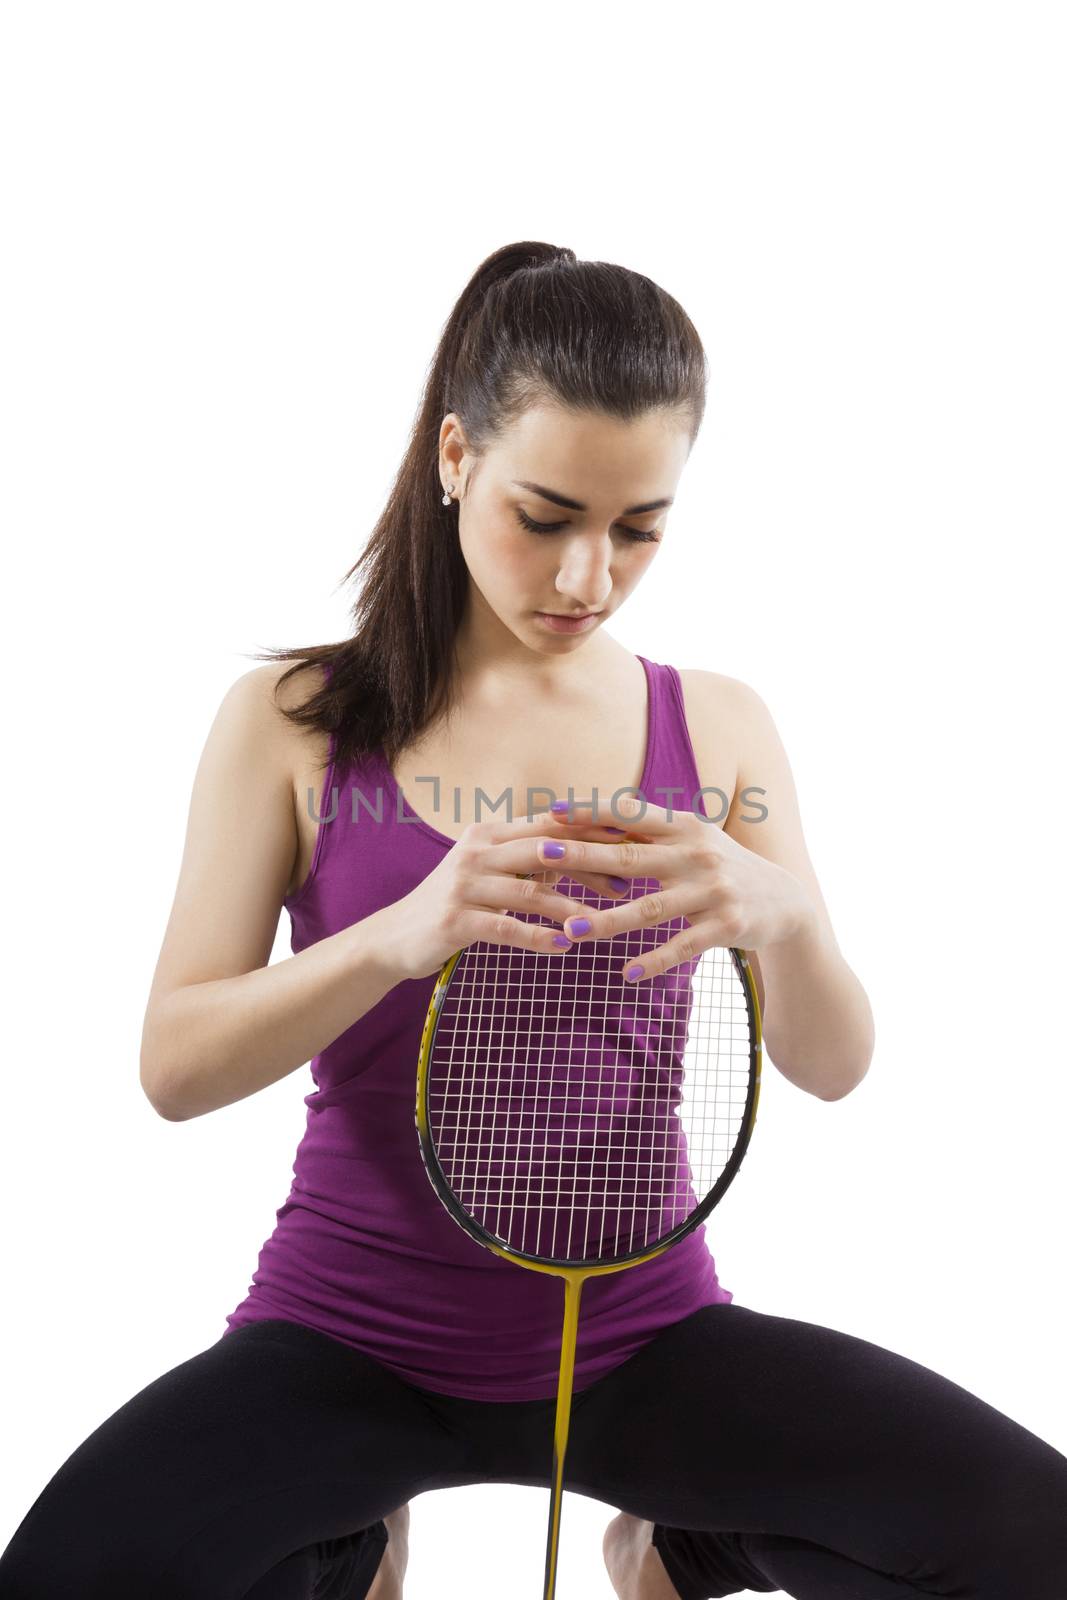 Beautiful girl holding badminton racket isolated on white background. Active healthy lifestyle.